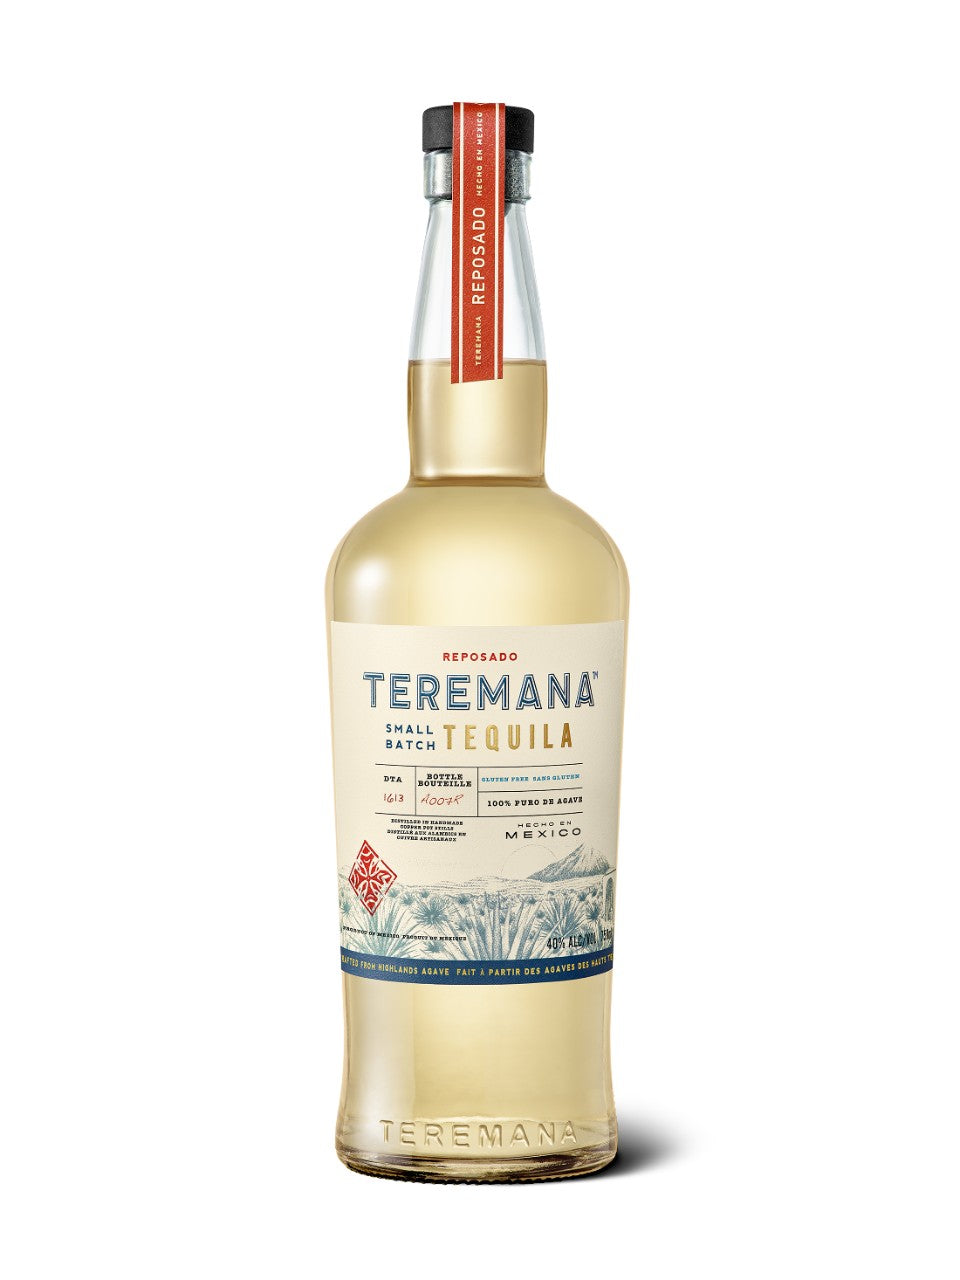 Teremana Reposado Tequila 750 mL bottle